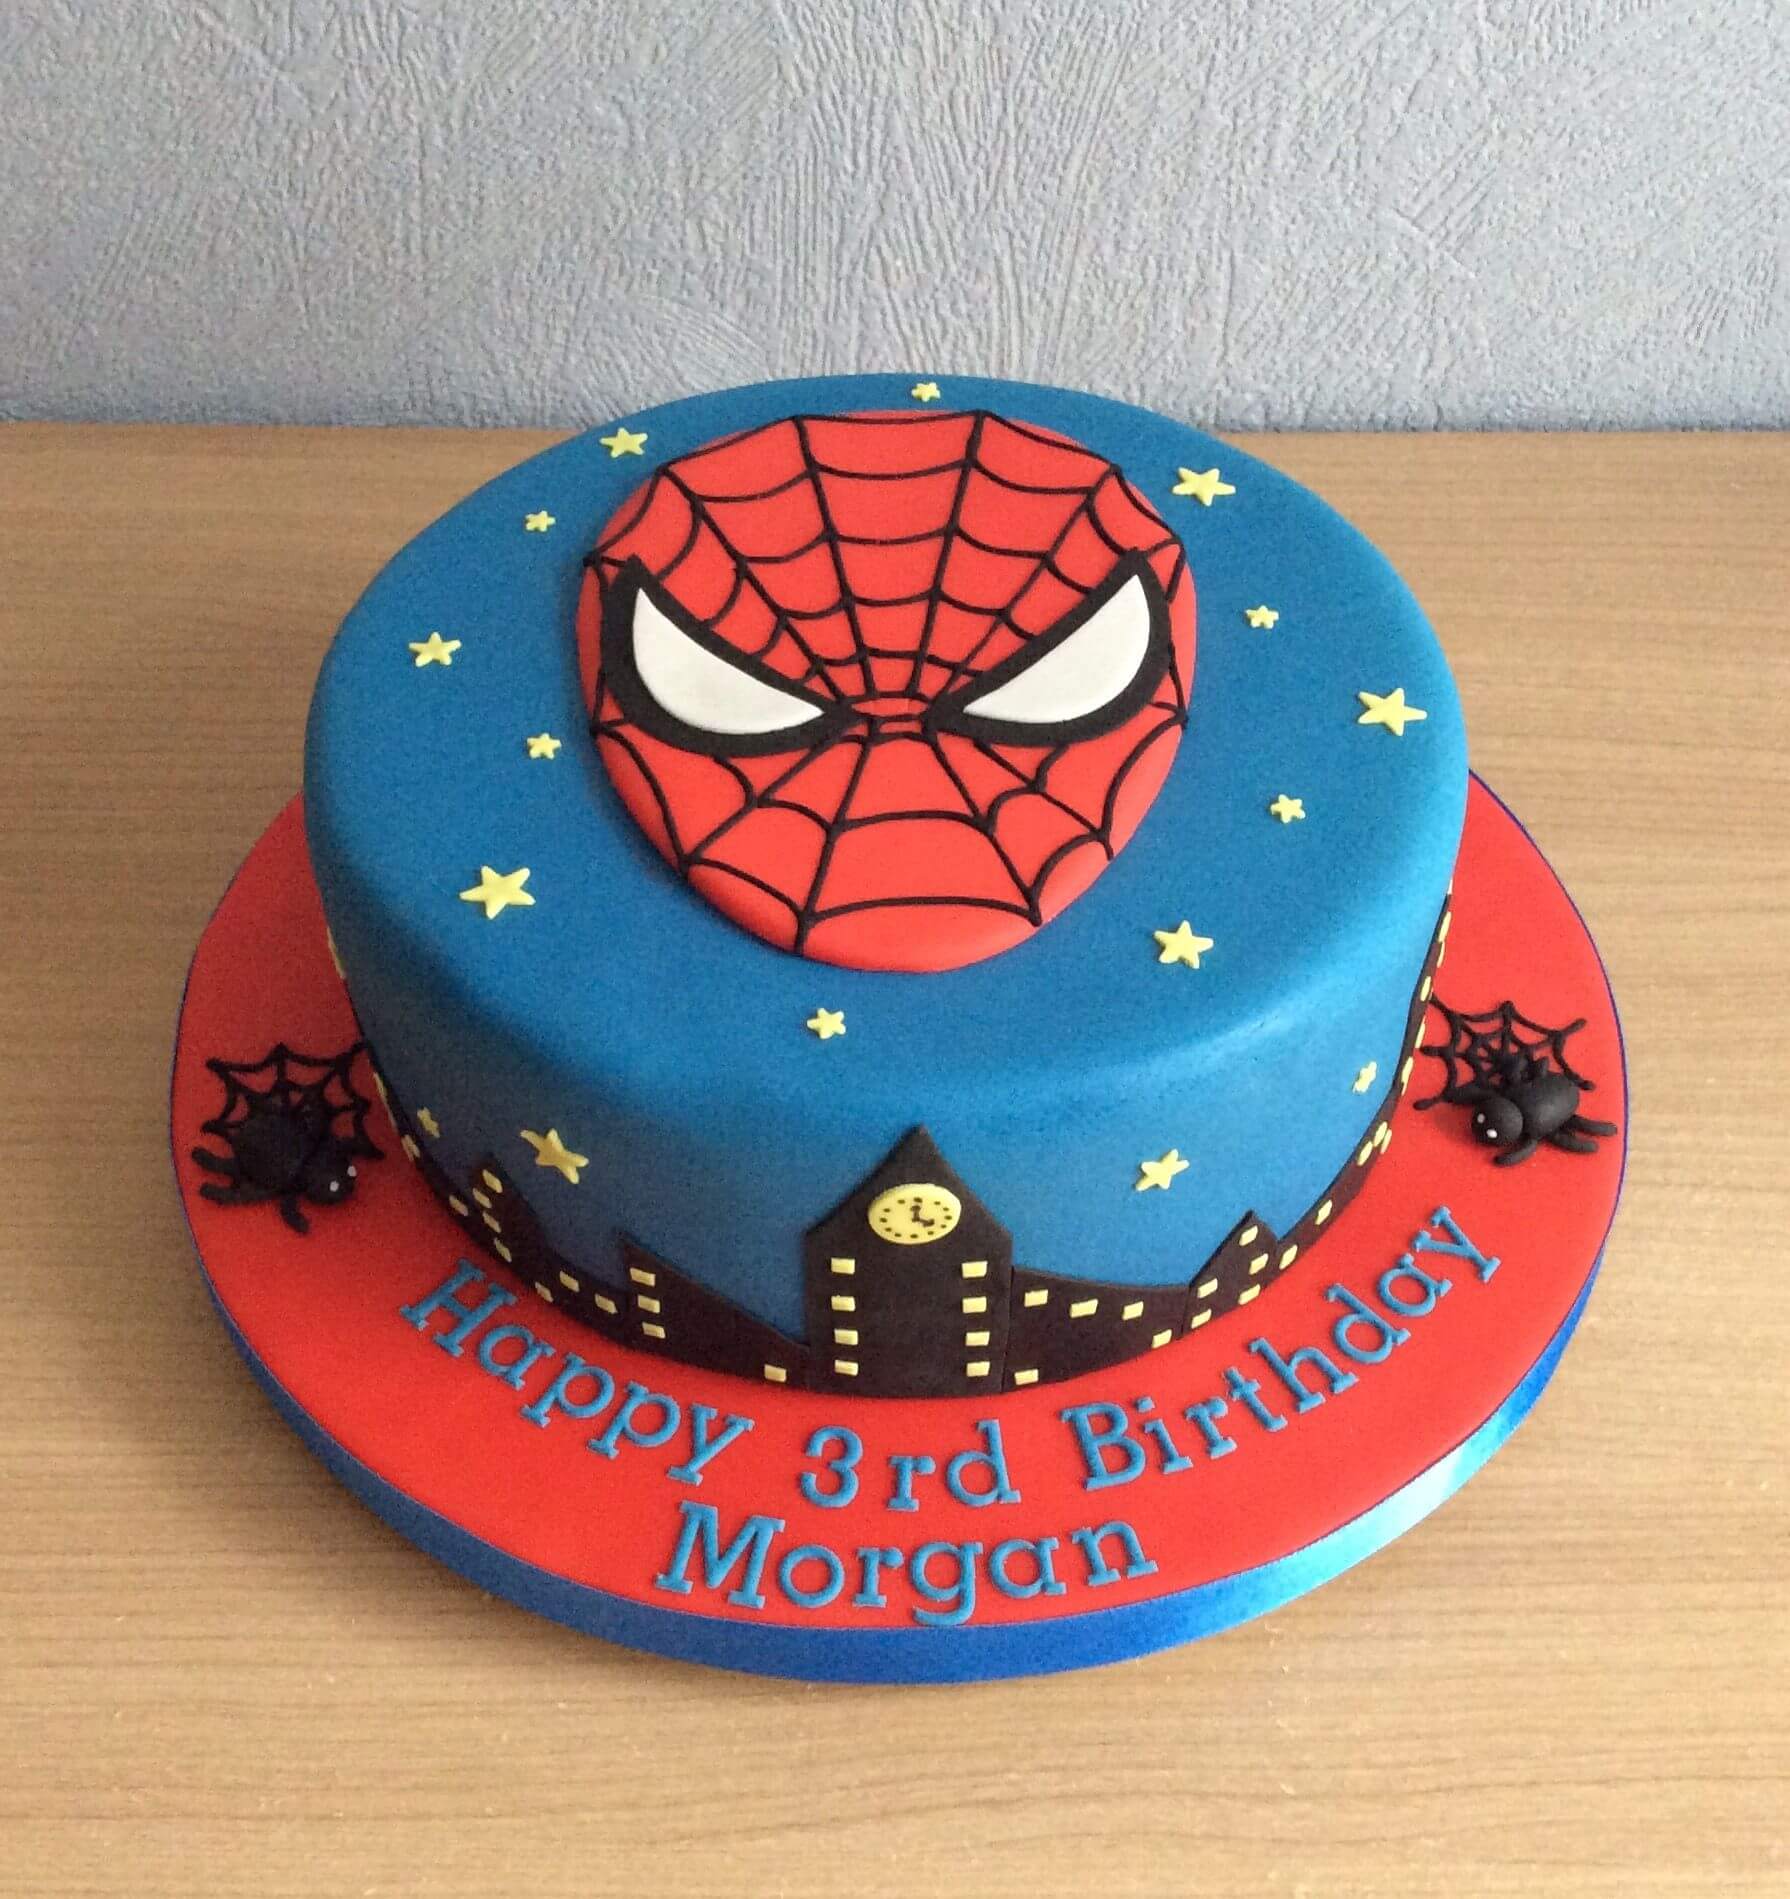 Details more than 208 spiderman cake design latest